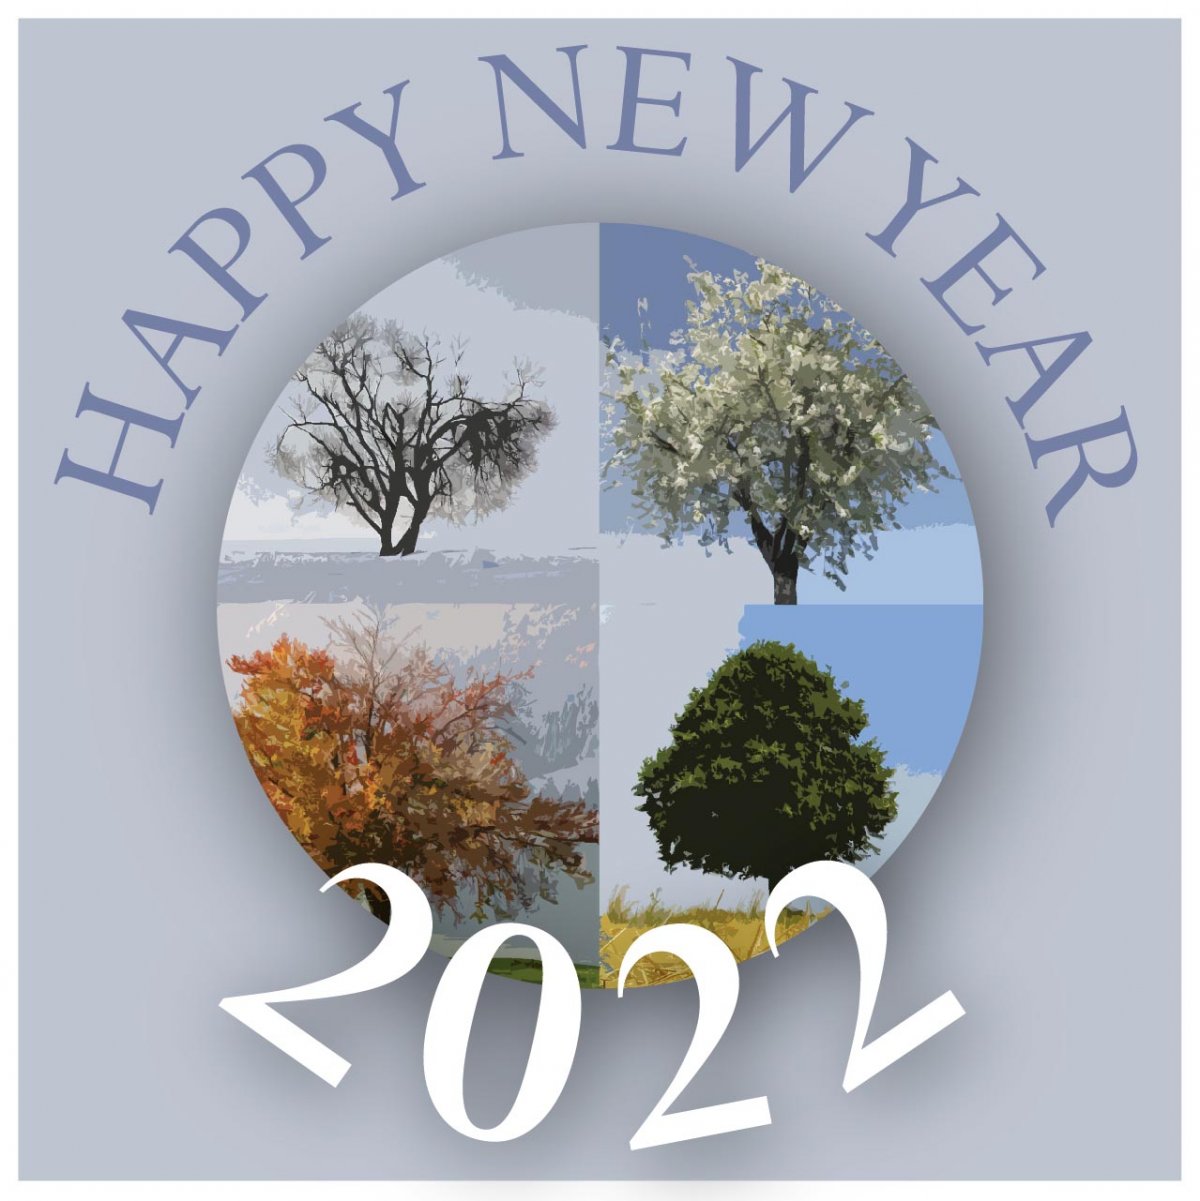 Happy New Year 2022 from Cassandra and Debi